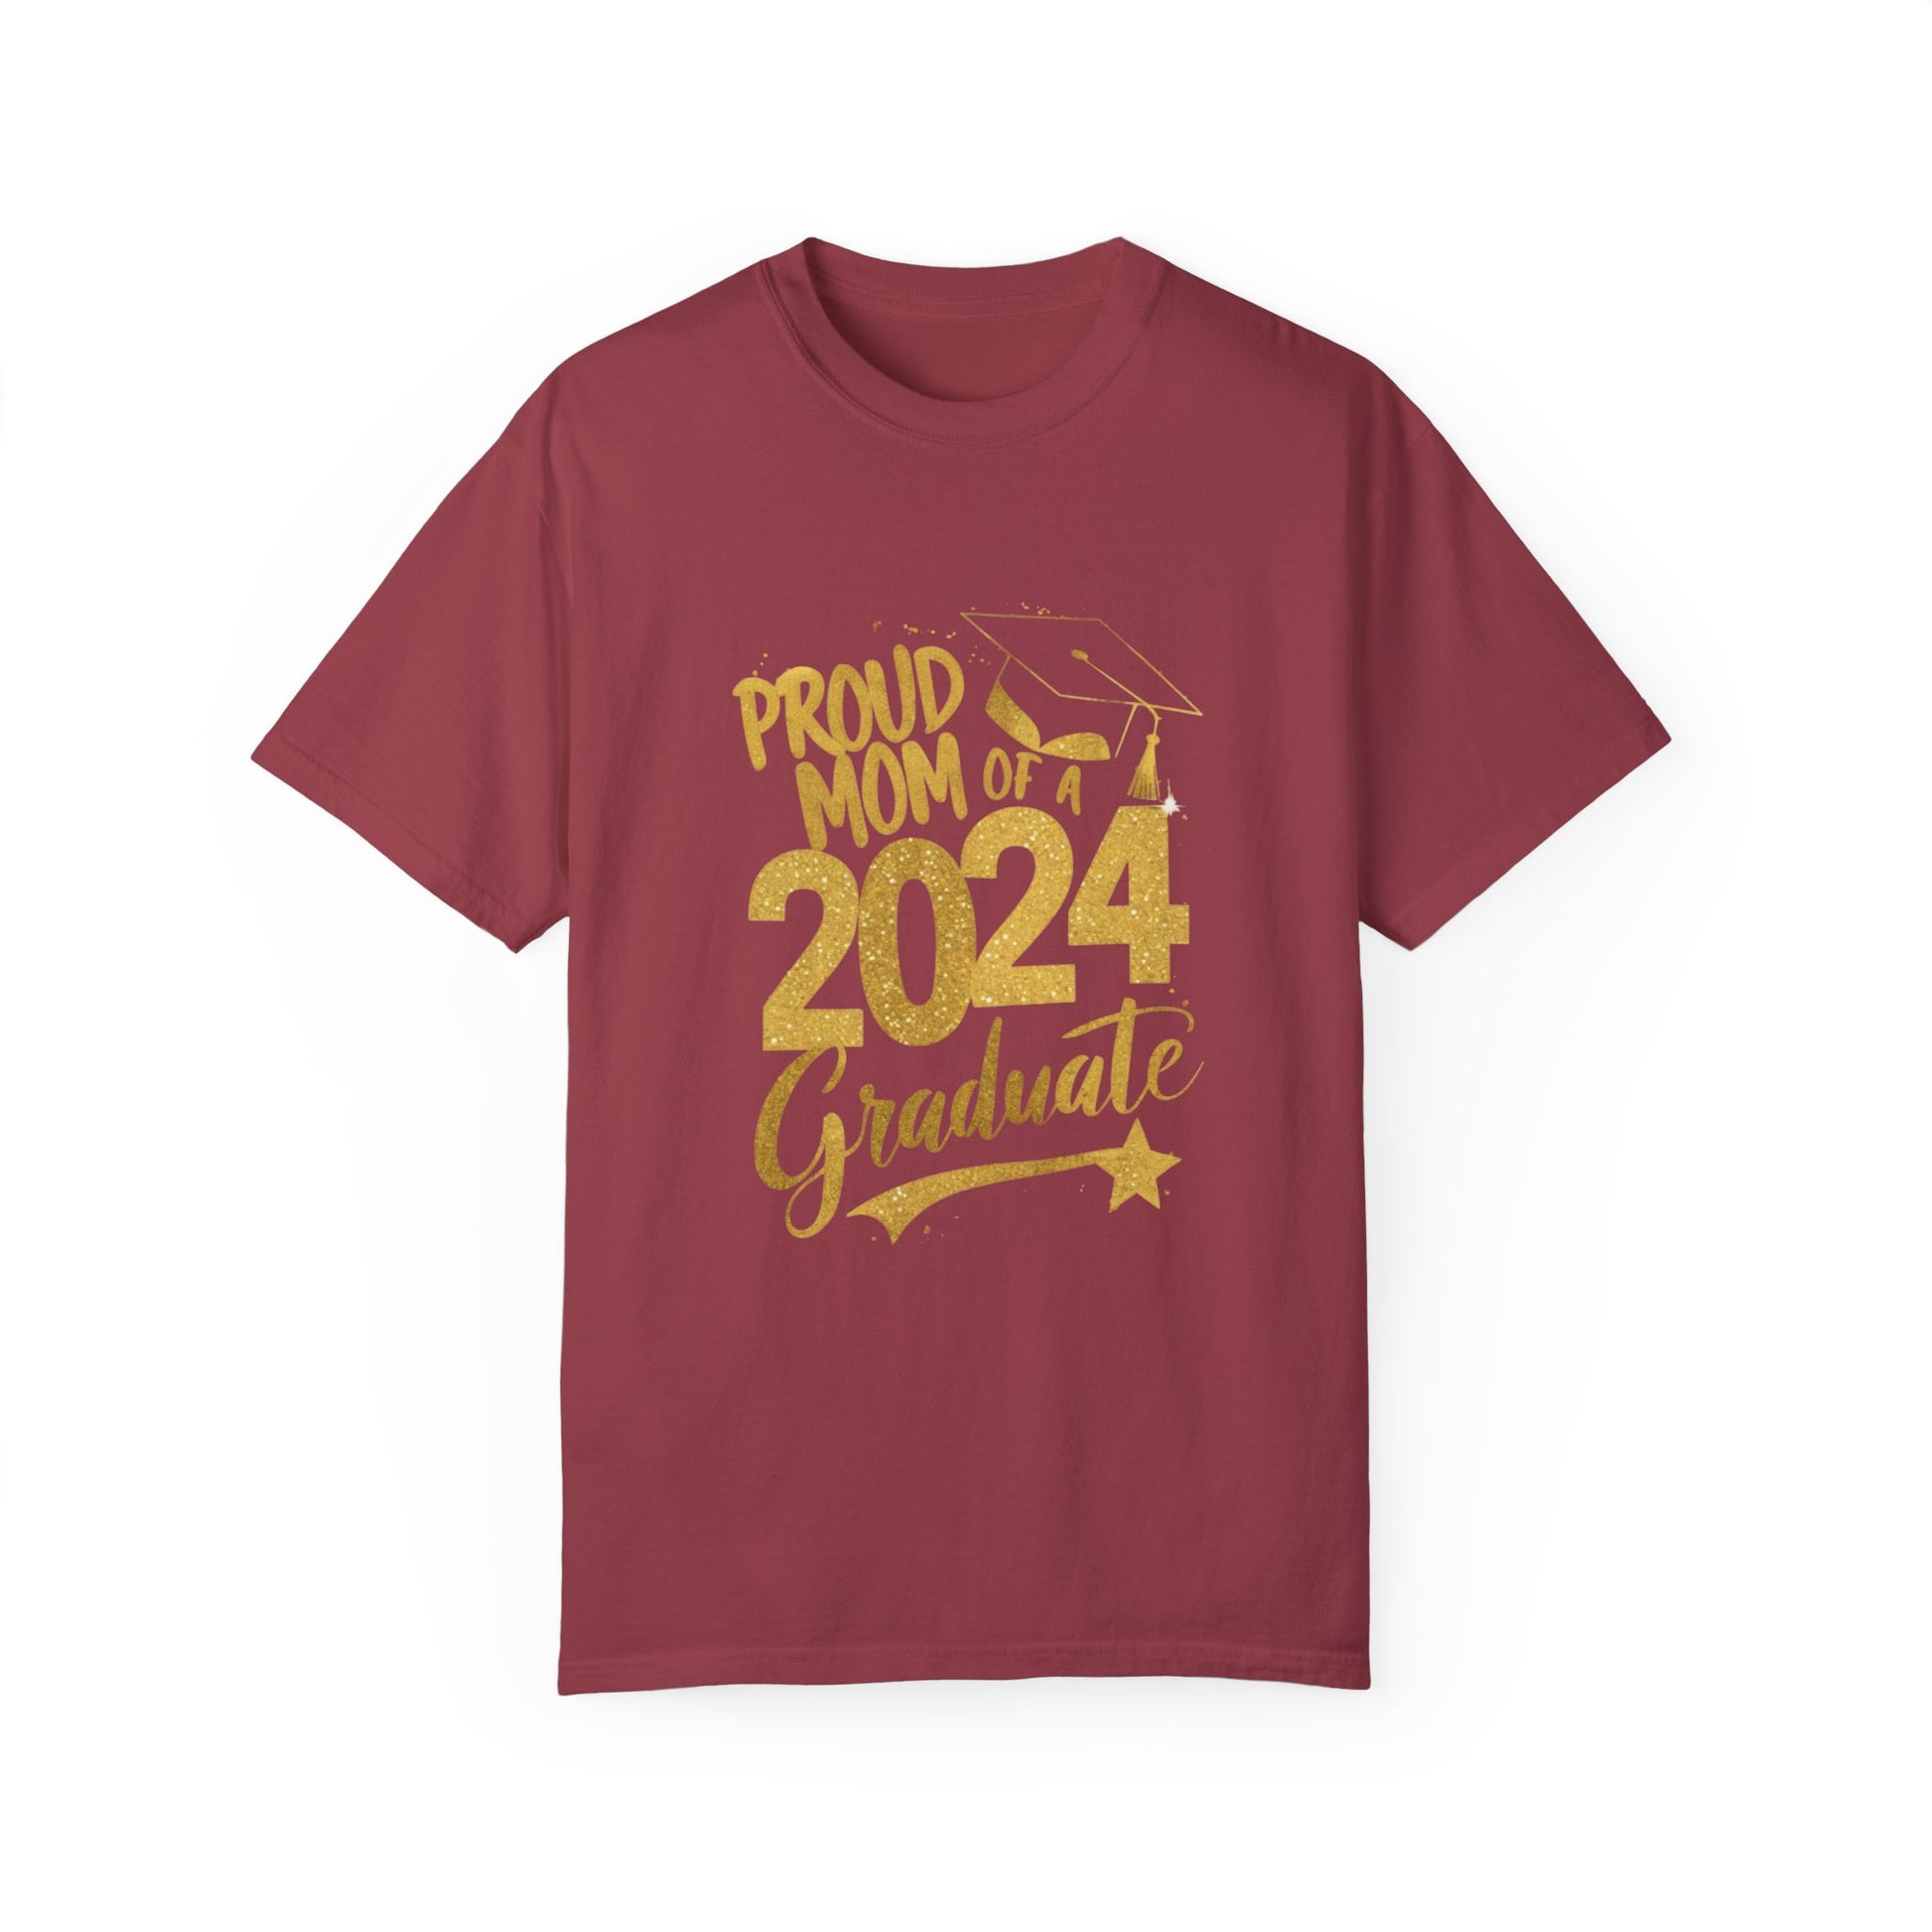 Proud of Mom 2024 Graduate Unisex Garment-dyed T-shirt Cotton Funny Humorous Graphic Soft Premium Unisex Men Women Chili T-shirt Birthday Gift-7